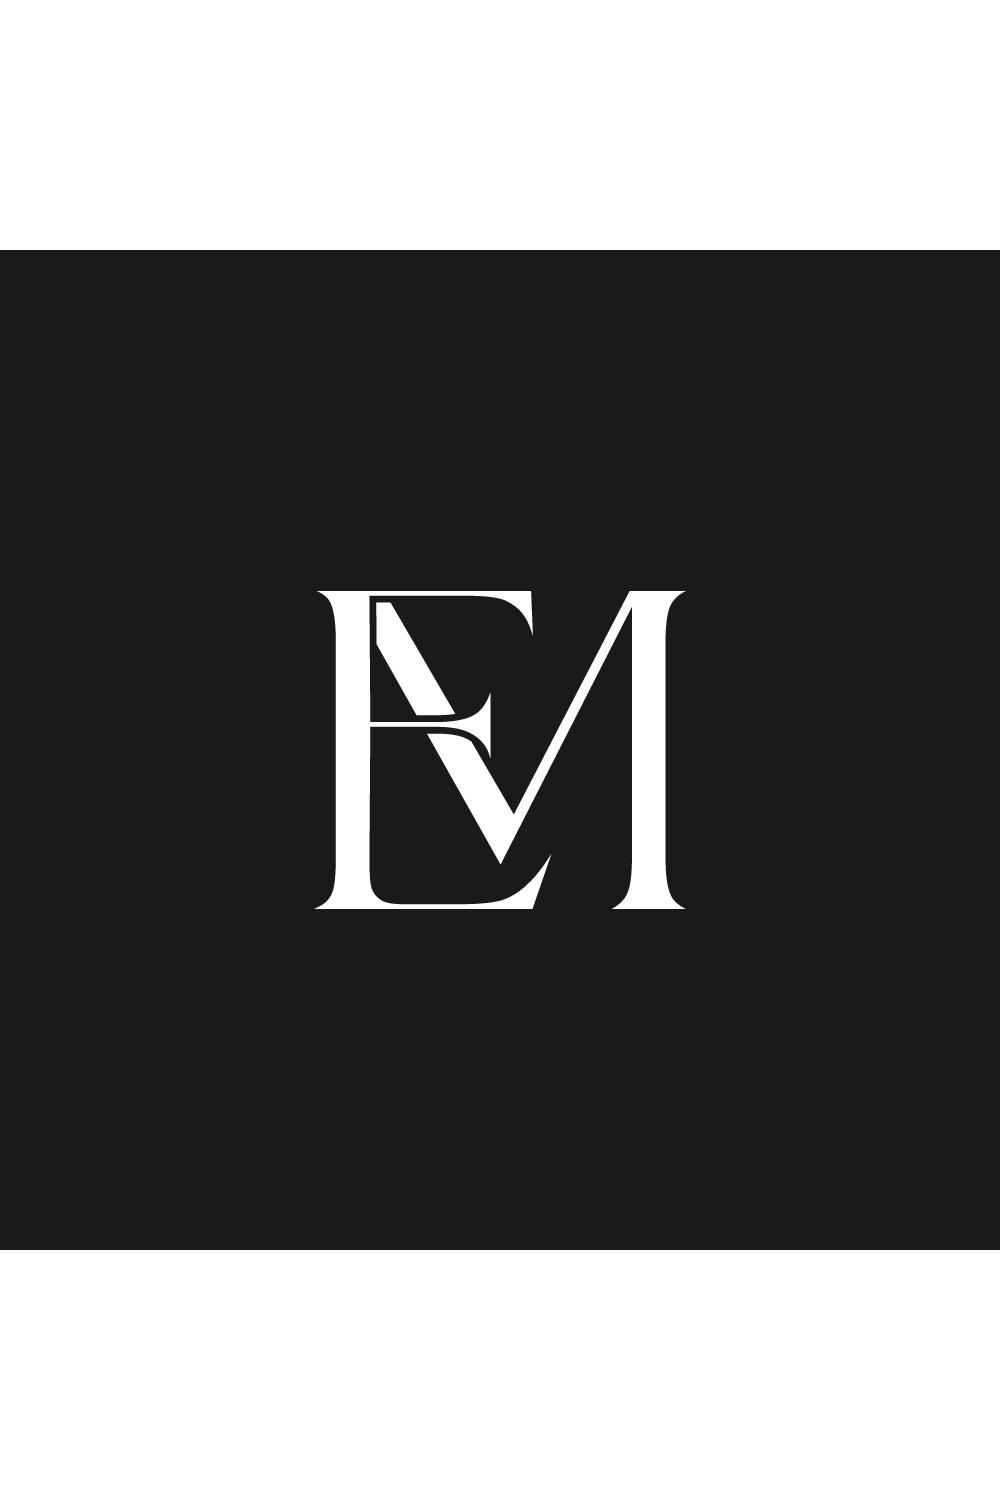 Initial EM Logo Design with Shield Style, Logo Business Branding Stock  Vector - Illustration of minimal, brand: 215703172